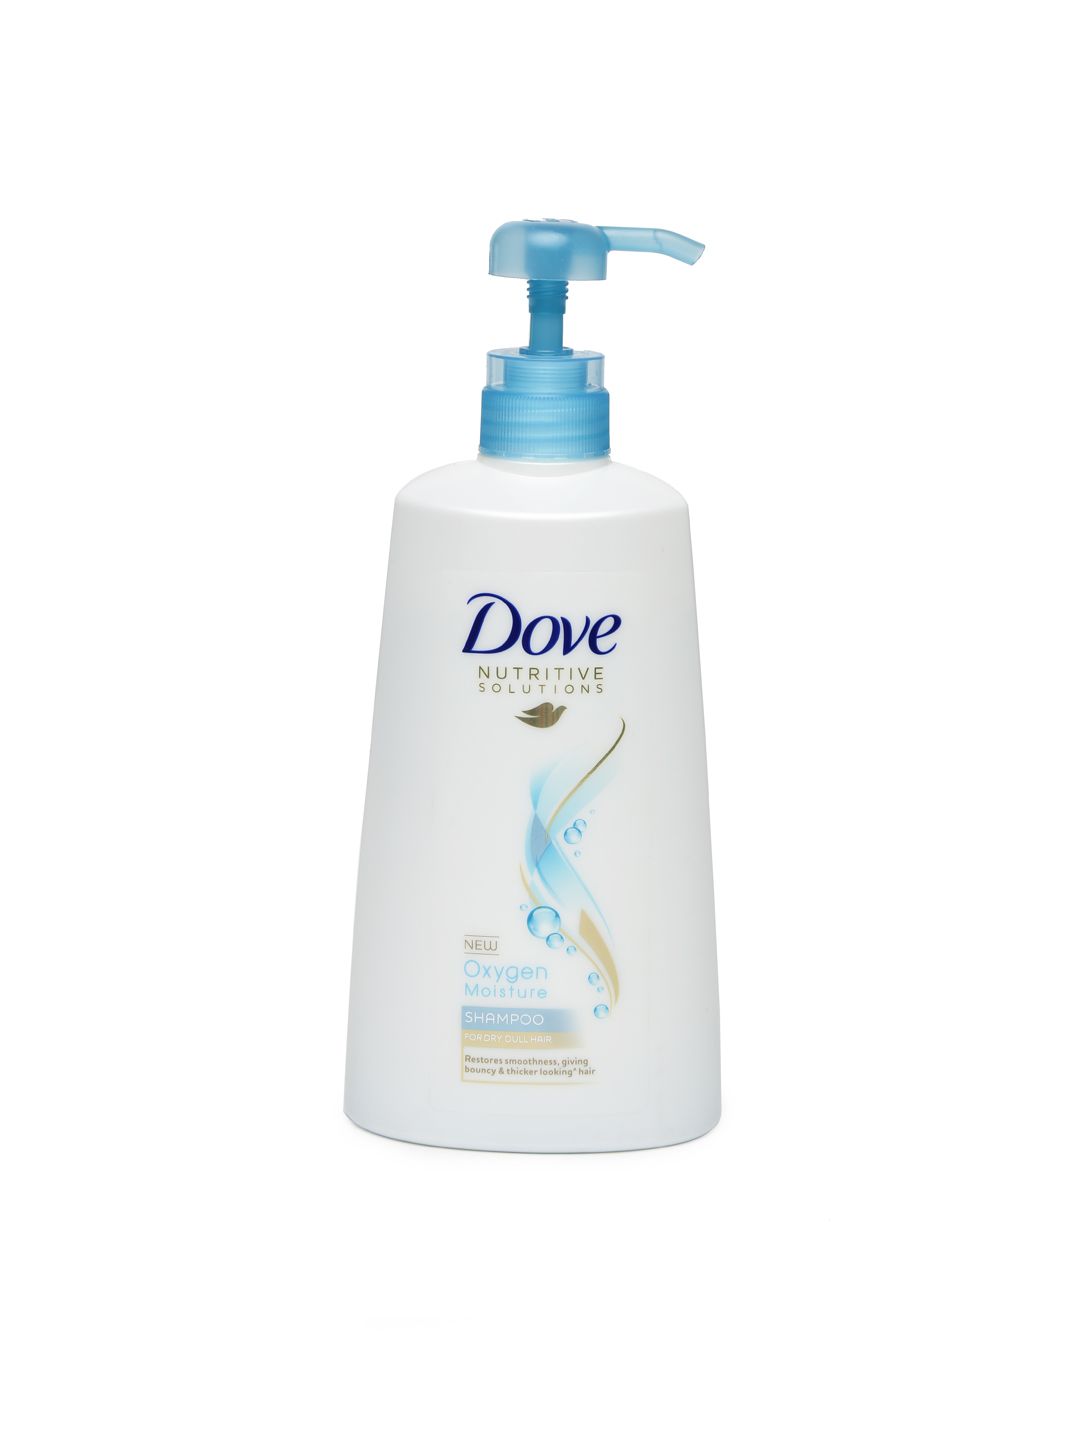 Dove Nutritive Solutions Oxygen Moisture Shampoo 650 ml Price in India